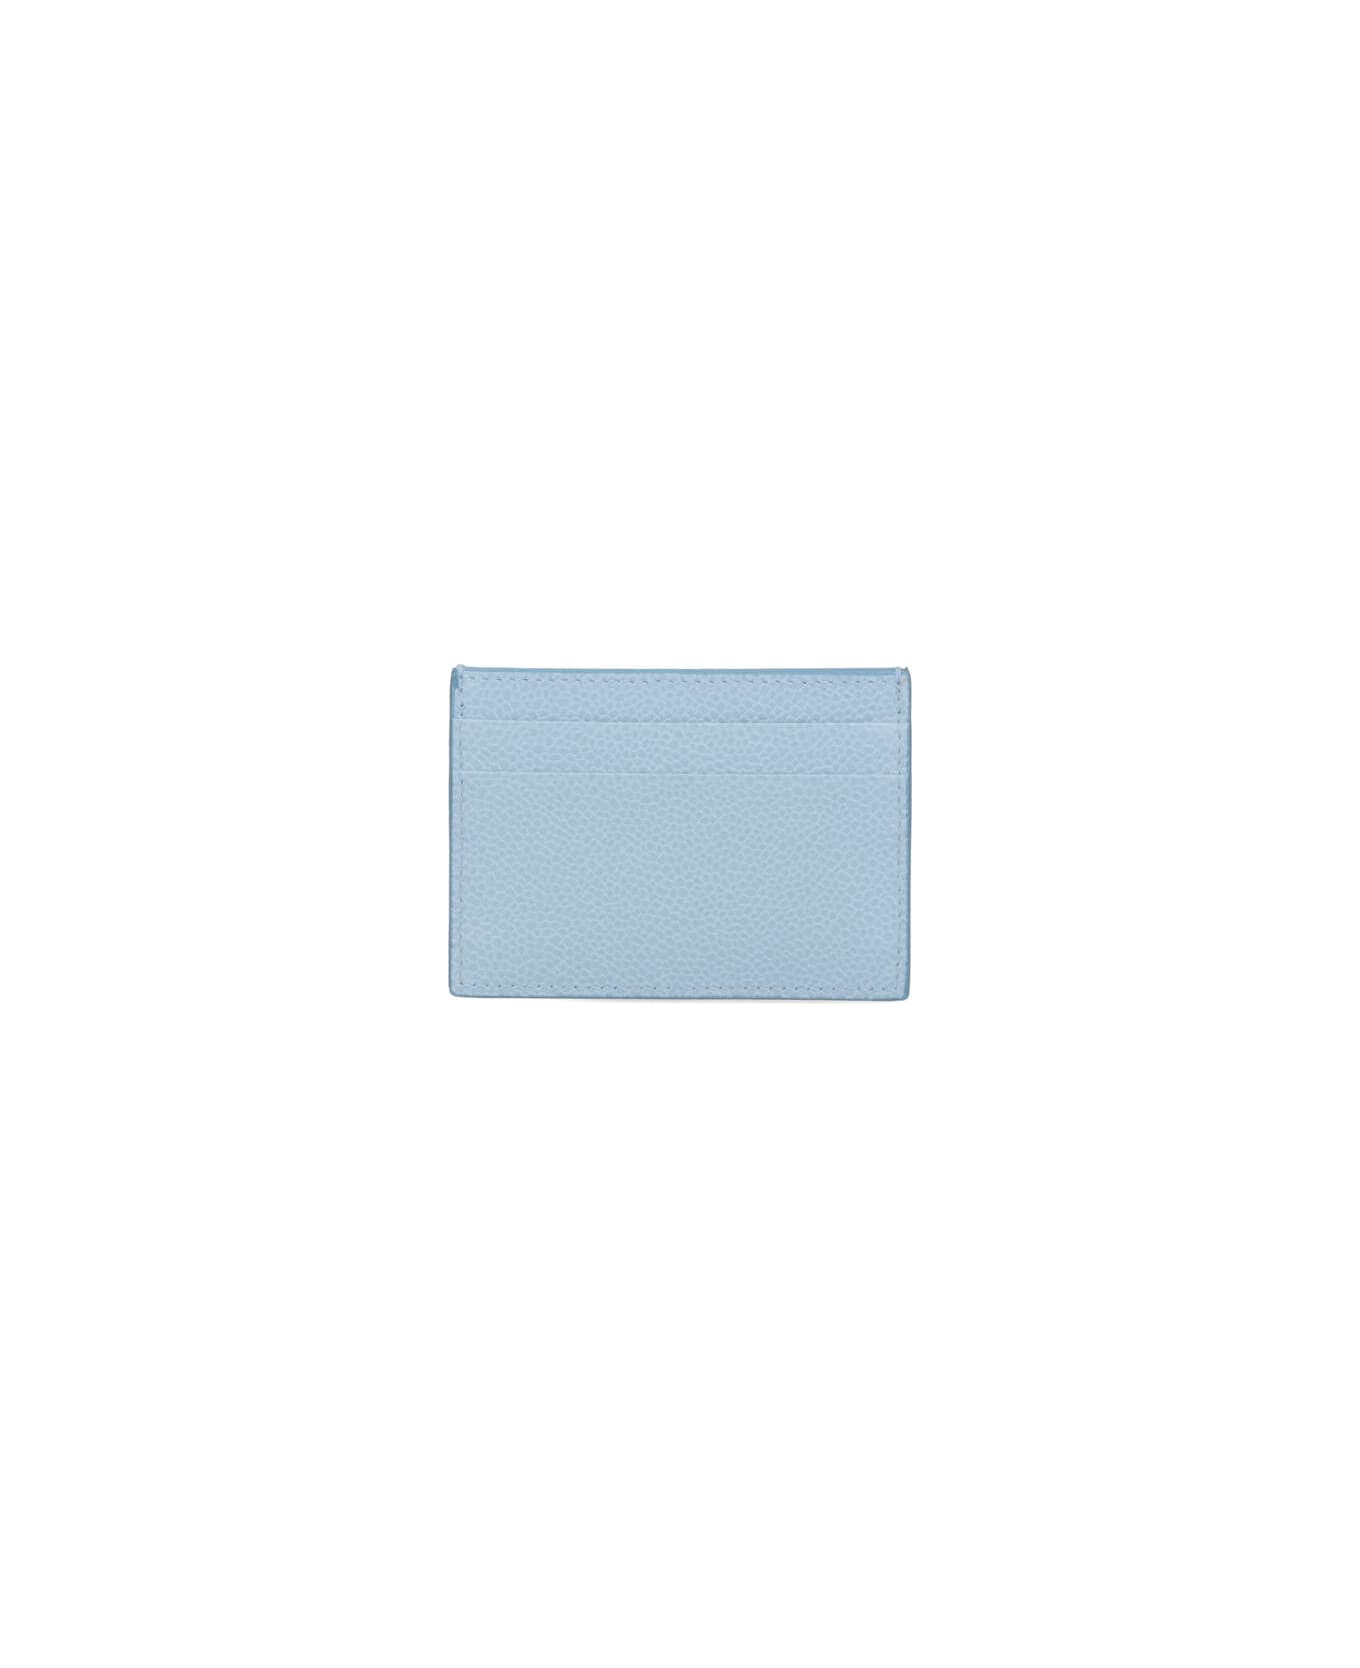 Thom Browne "pebble Grain" Card Holder - Light Blue